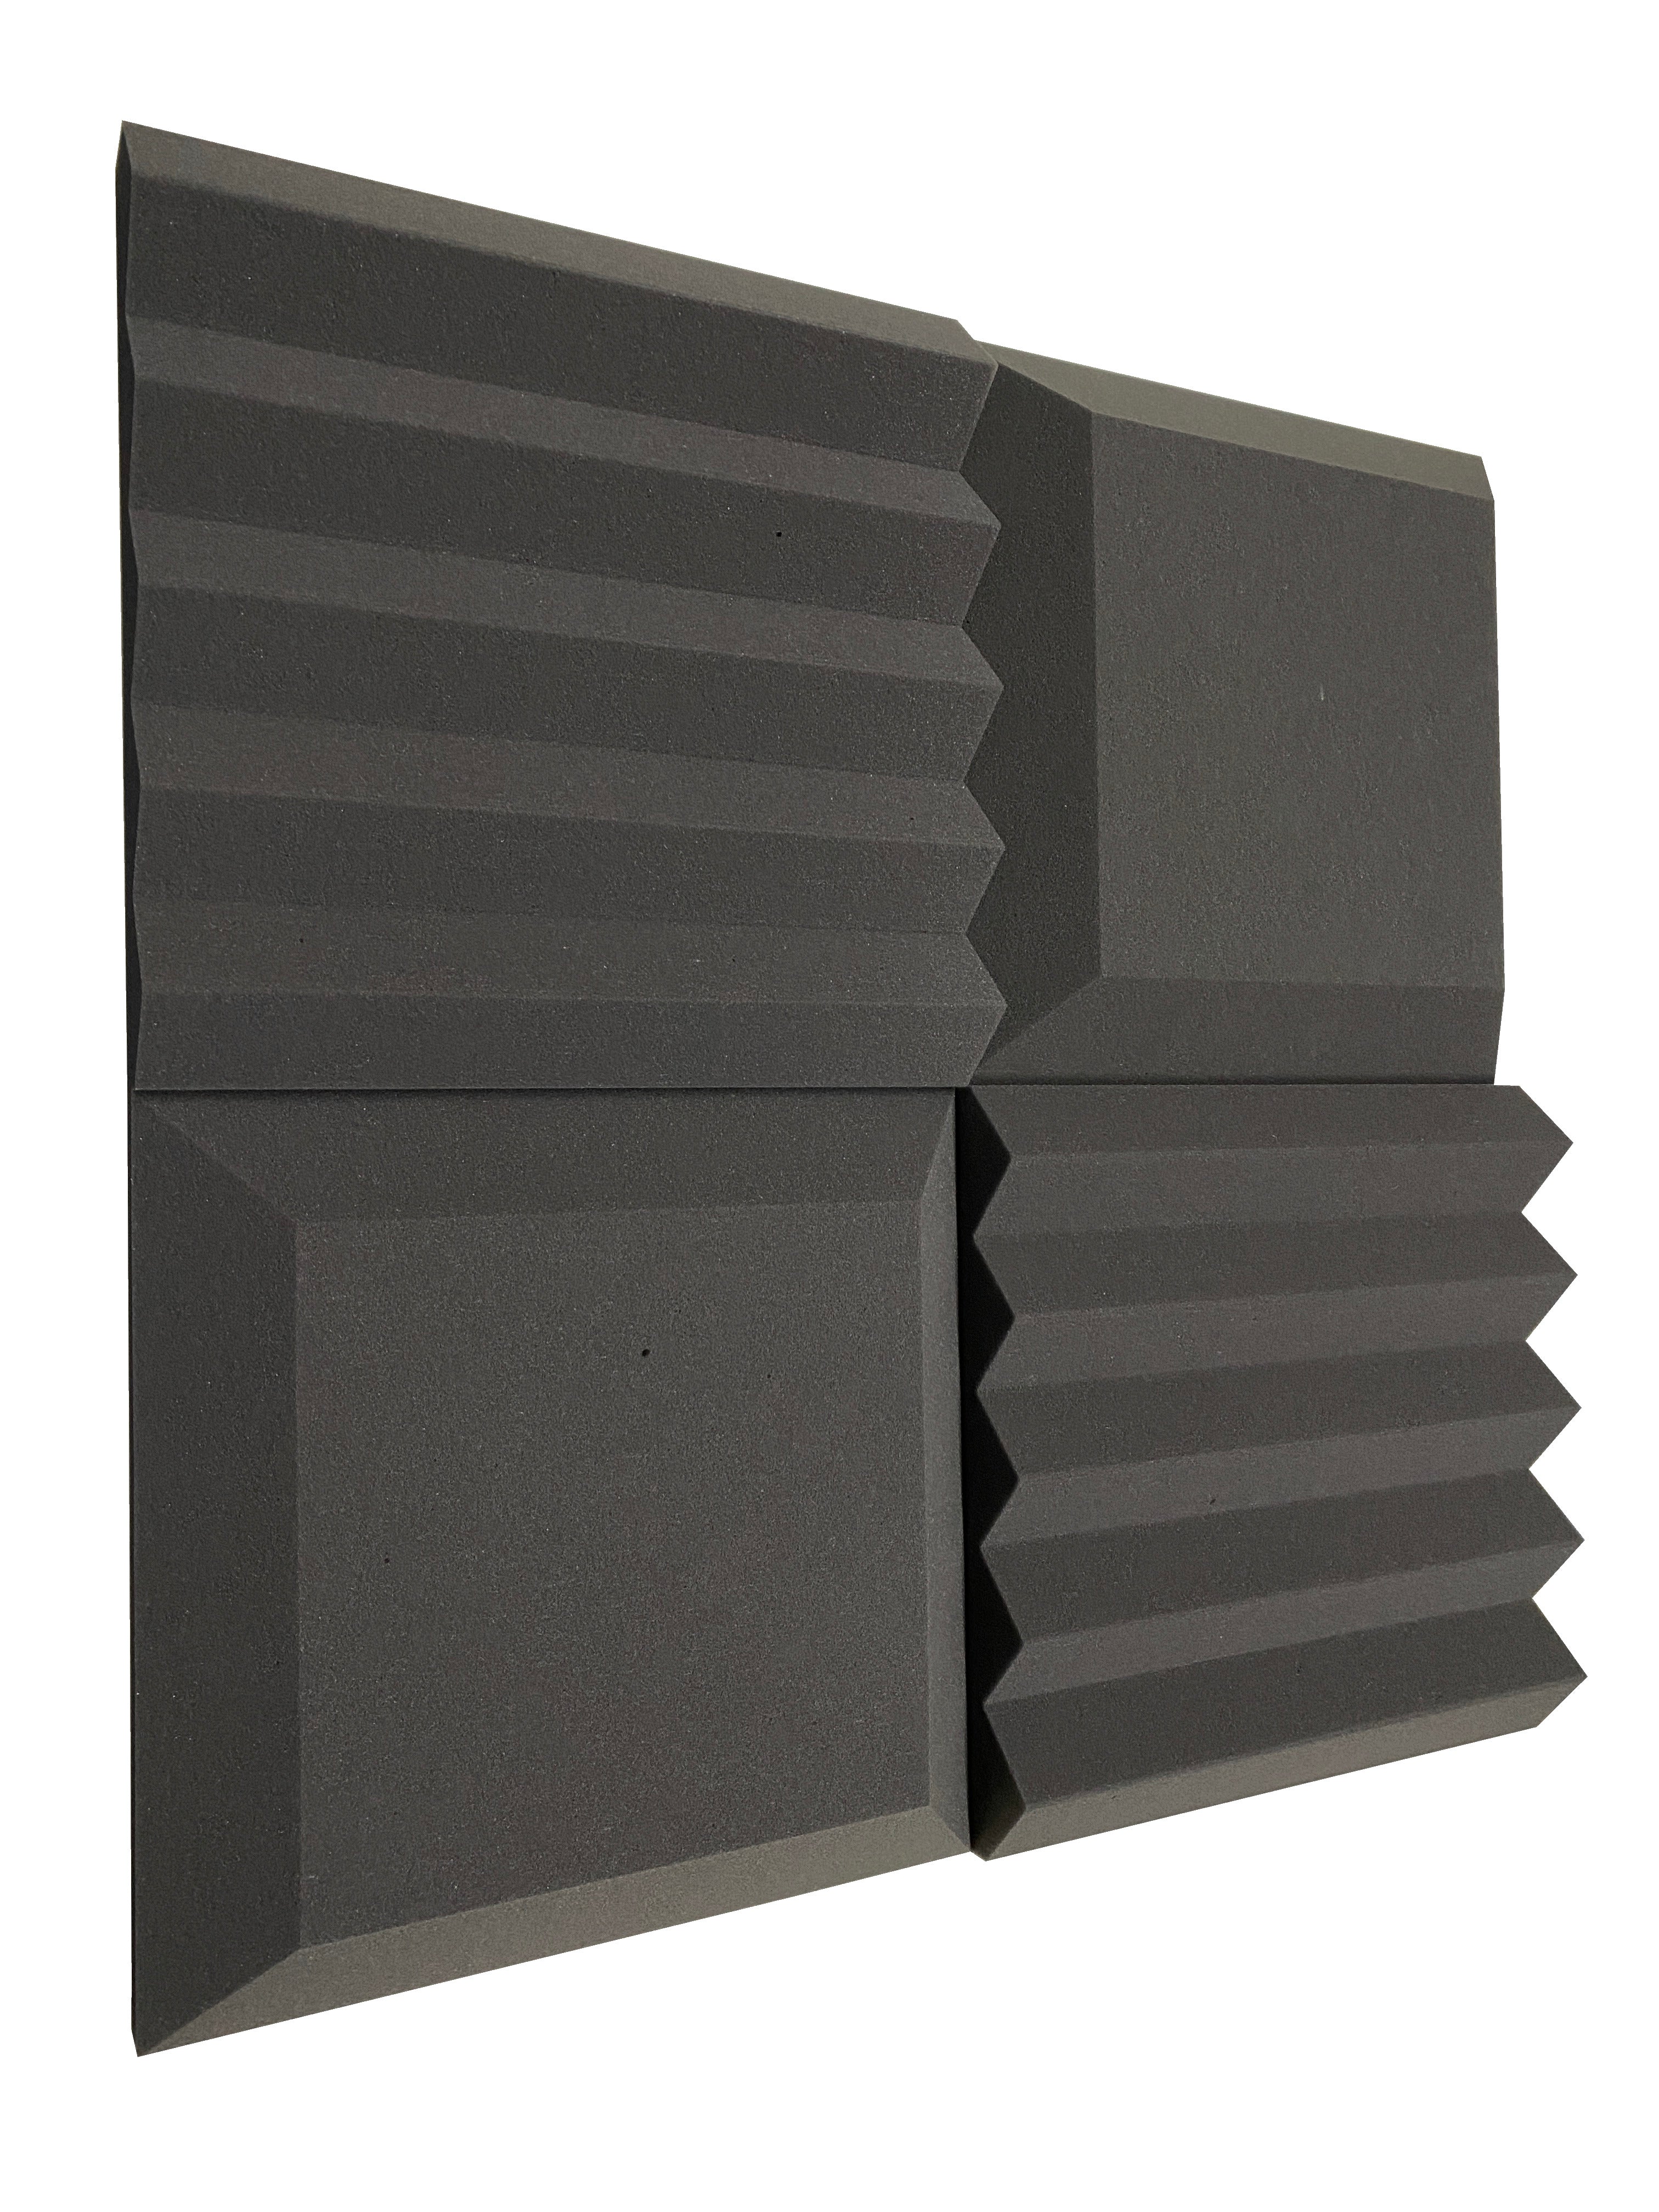 Kaufen dunkelgrau Euphonic Wedge PRO Acoustic Studio Foam Tile Pack – 24 Tiles, 3,48 m² Abdeckung